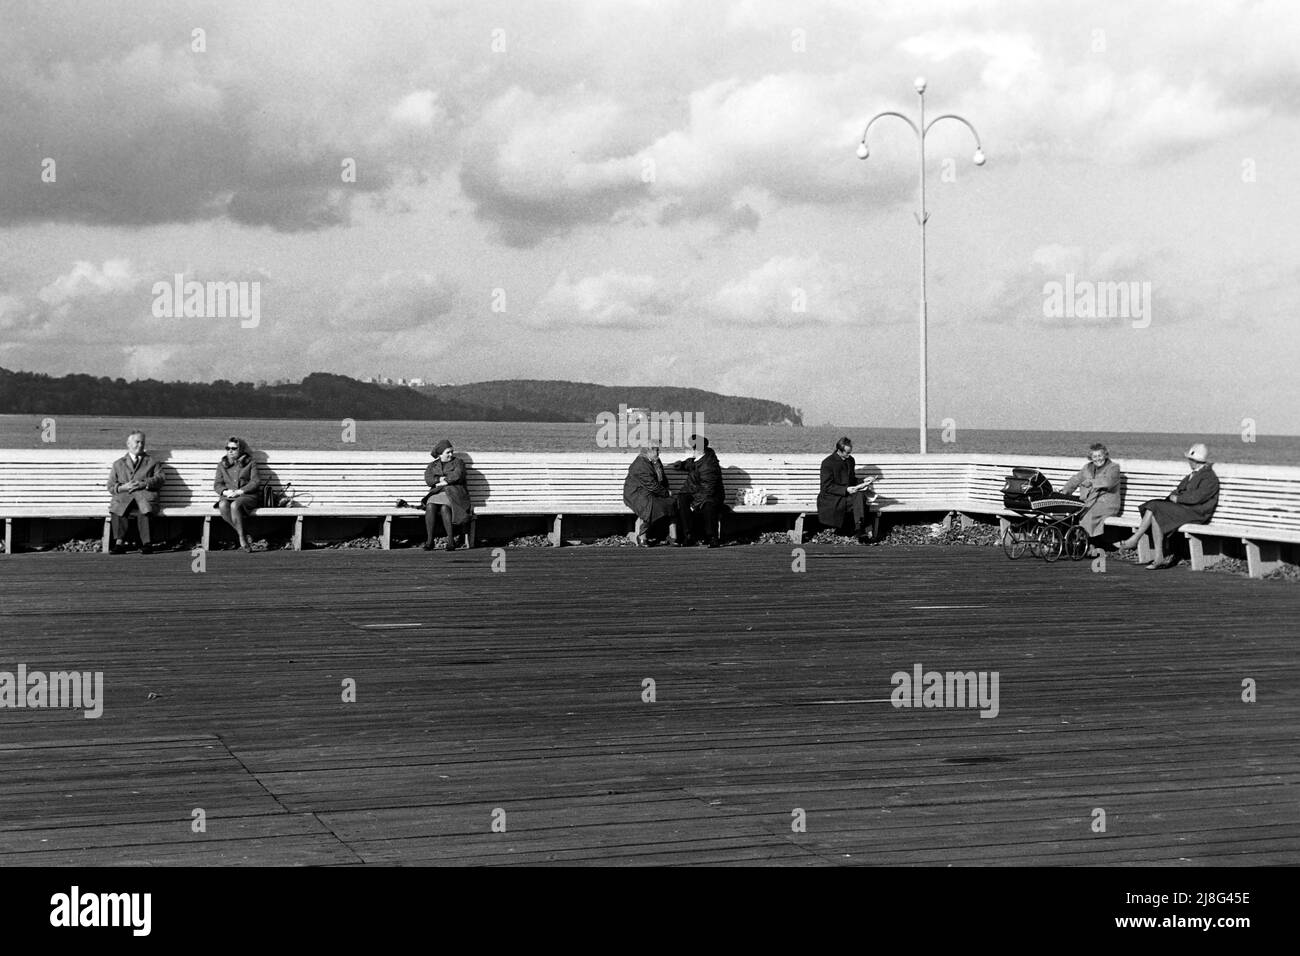 Danziger Bucht, Polen, circa 1964. Gdansk Bay, Poland, roundabout 1964. Stock Photo